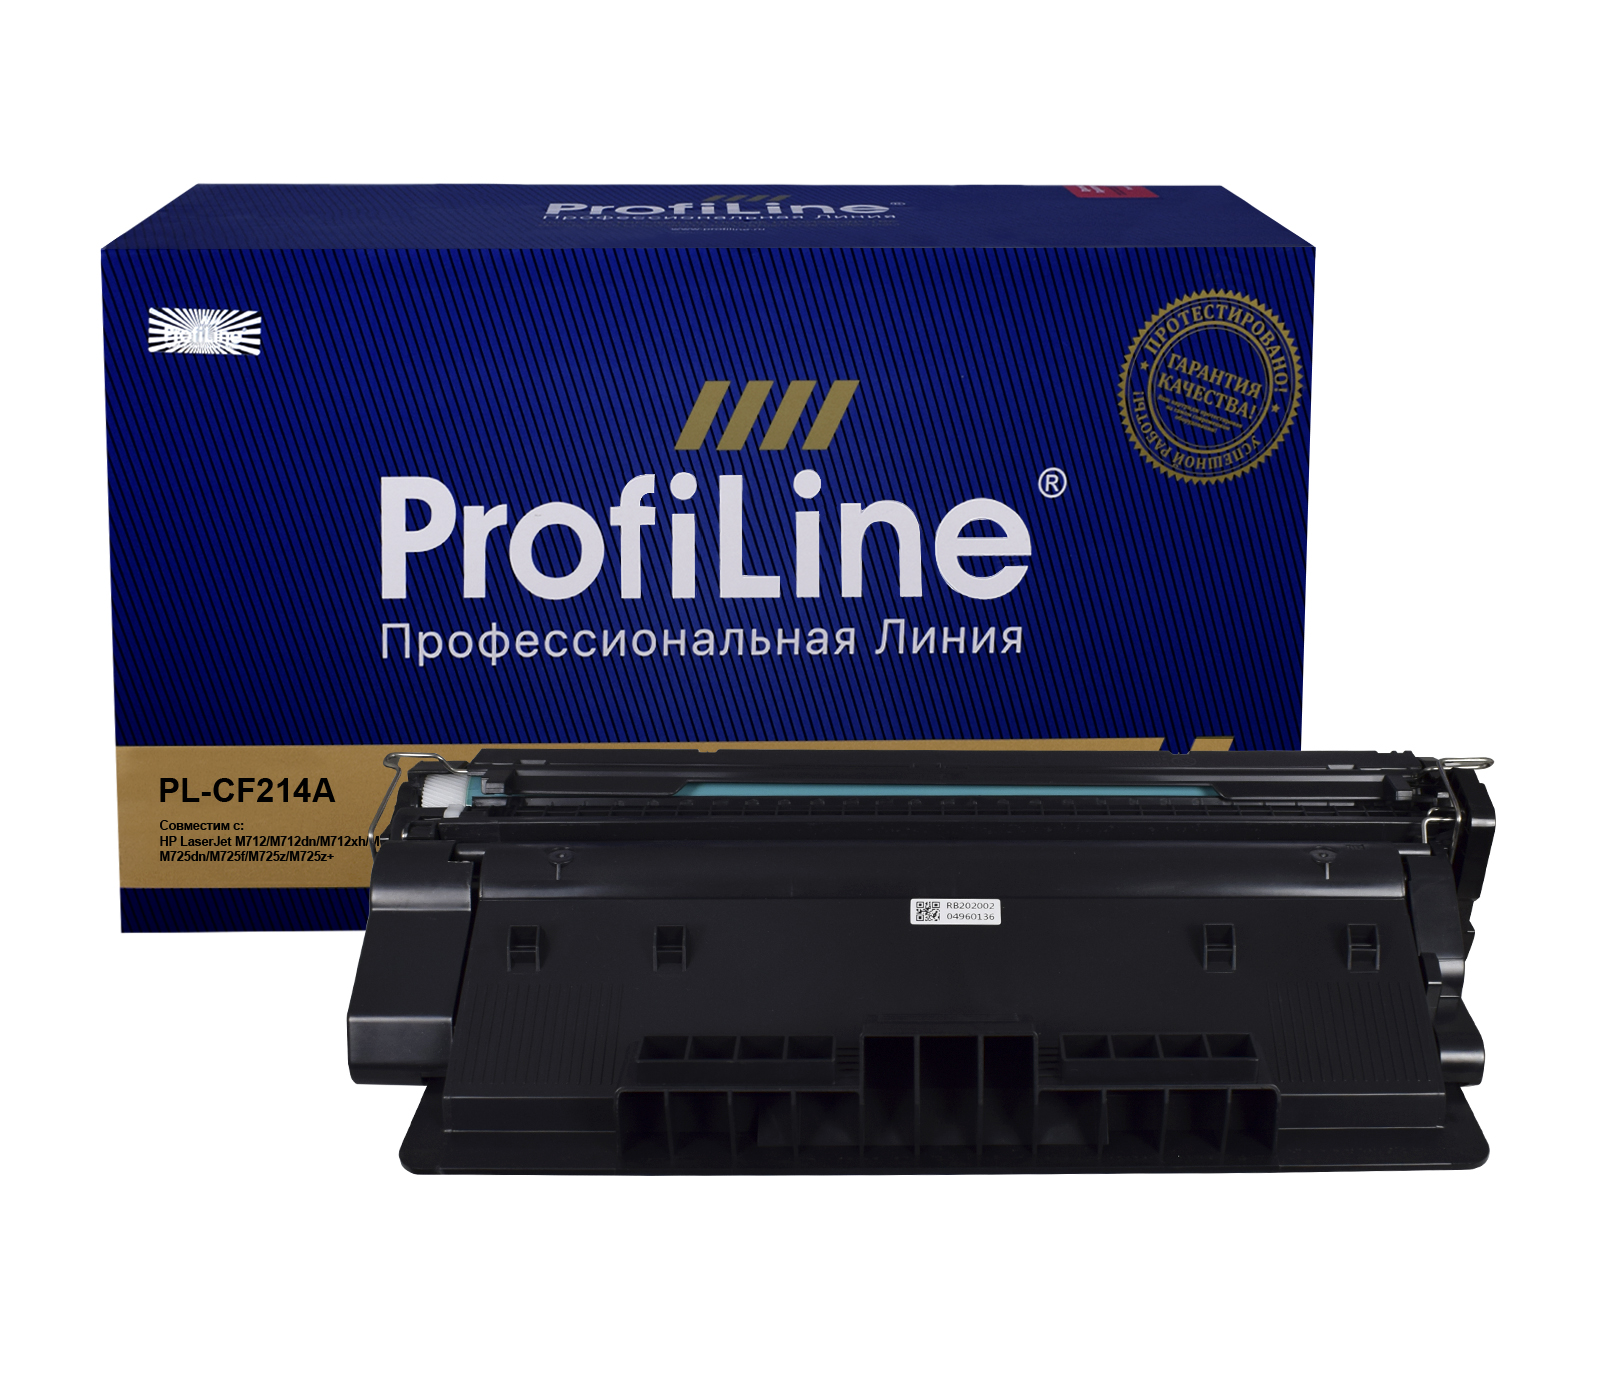 Картридж ProfiLine PL-CF214A Black картридж струйный profiline pl c5016a